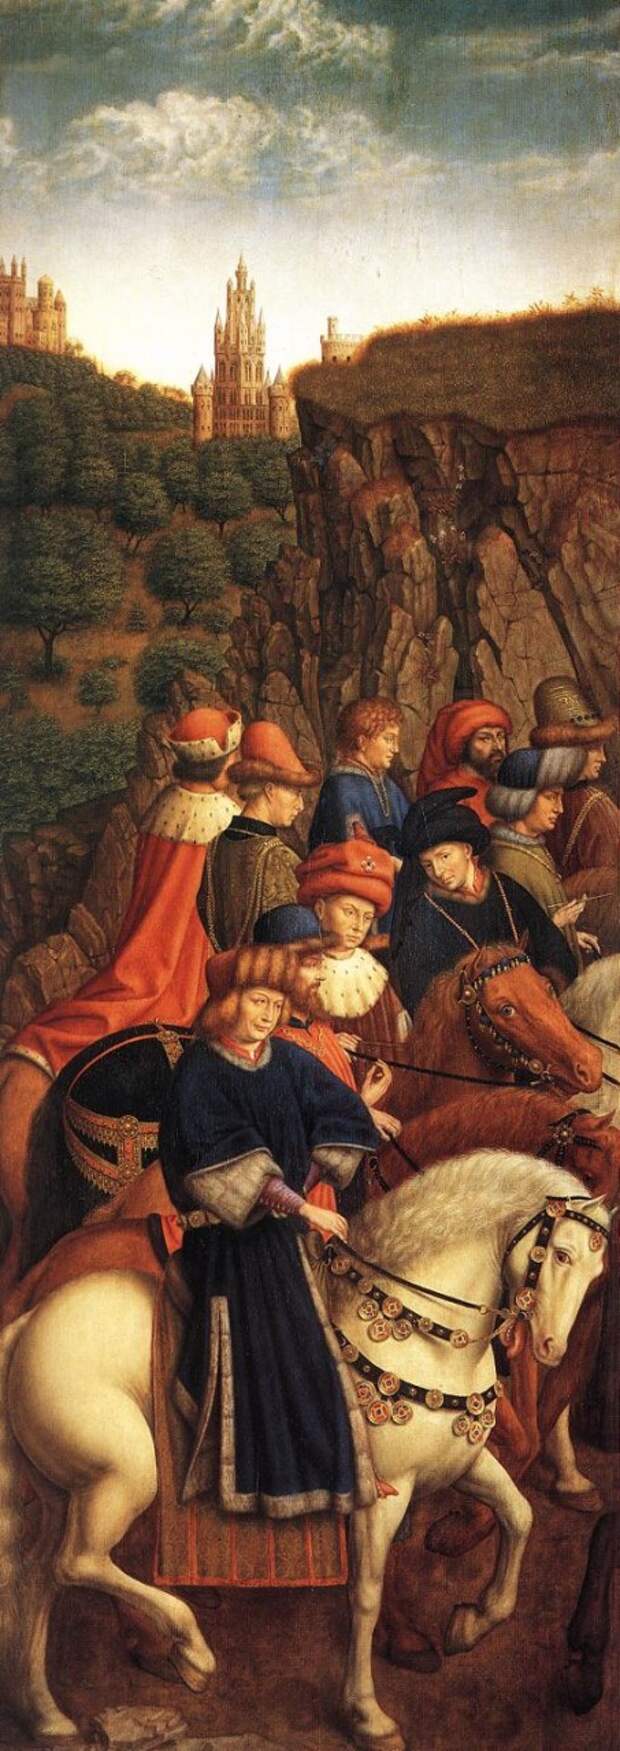 Ян ван Эйк - Eyck Jan van The Ghent Altarpiece The Just Judges